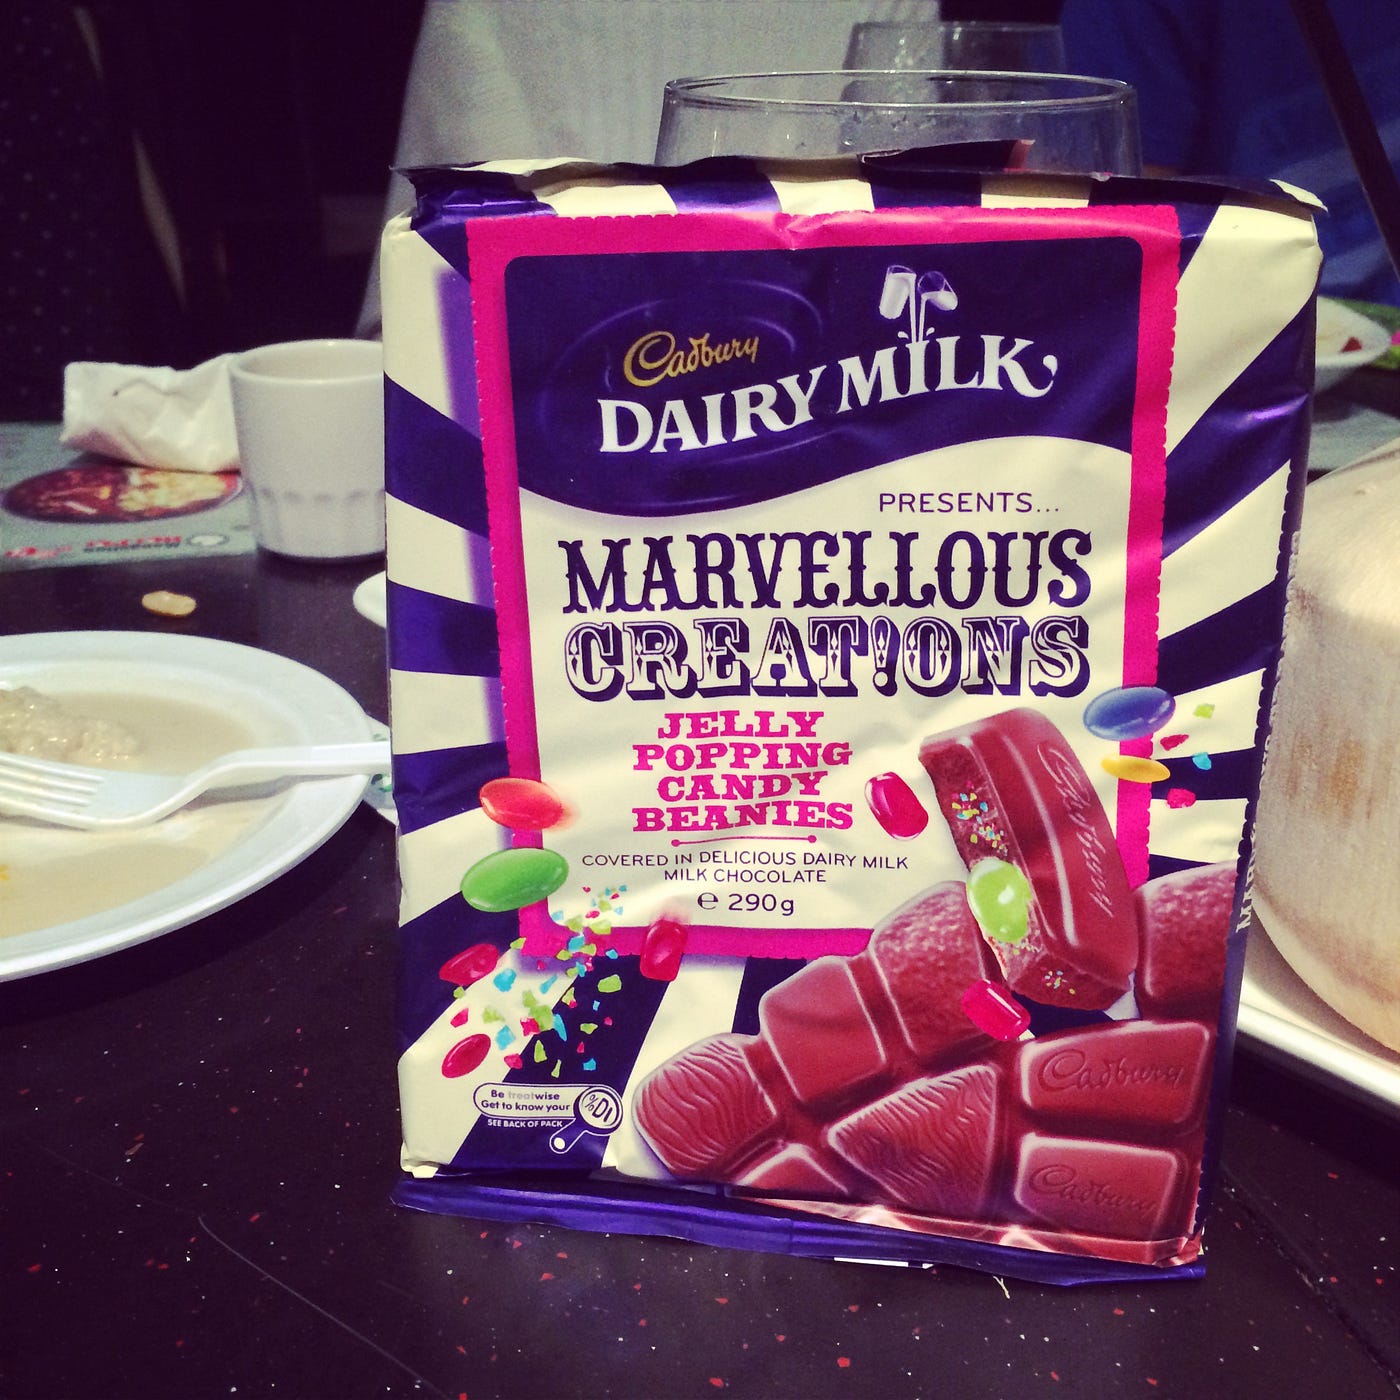 M&M's Milk Chocolate Birthday Candy - 5lb of Bulk Candy with Printed Happy Birth